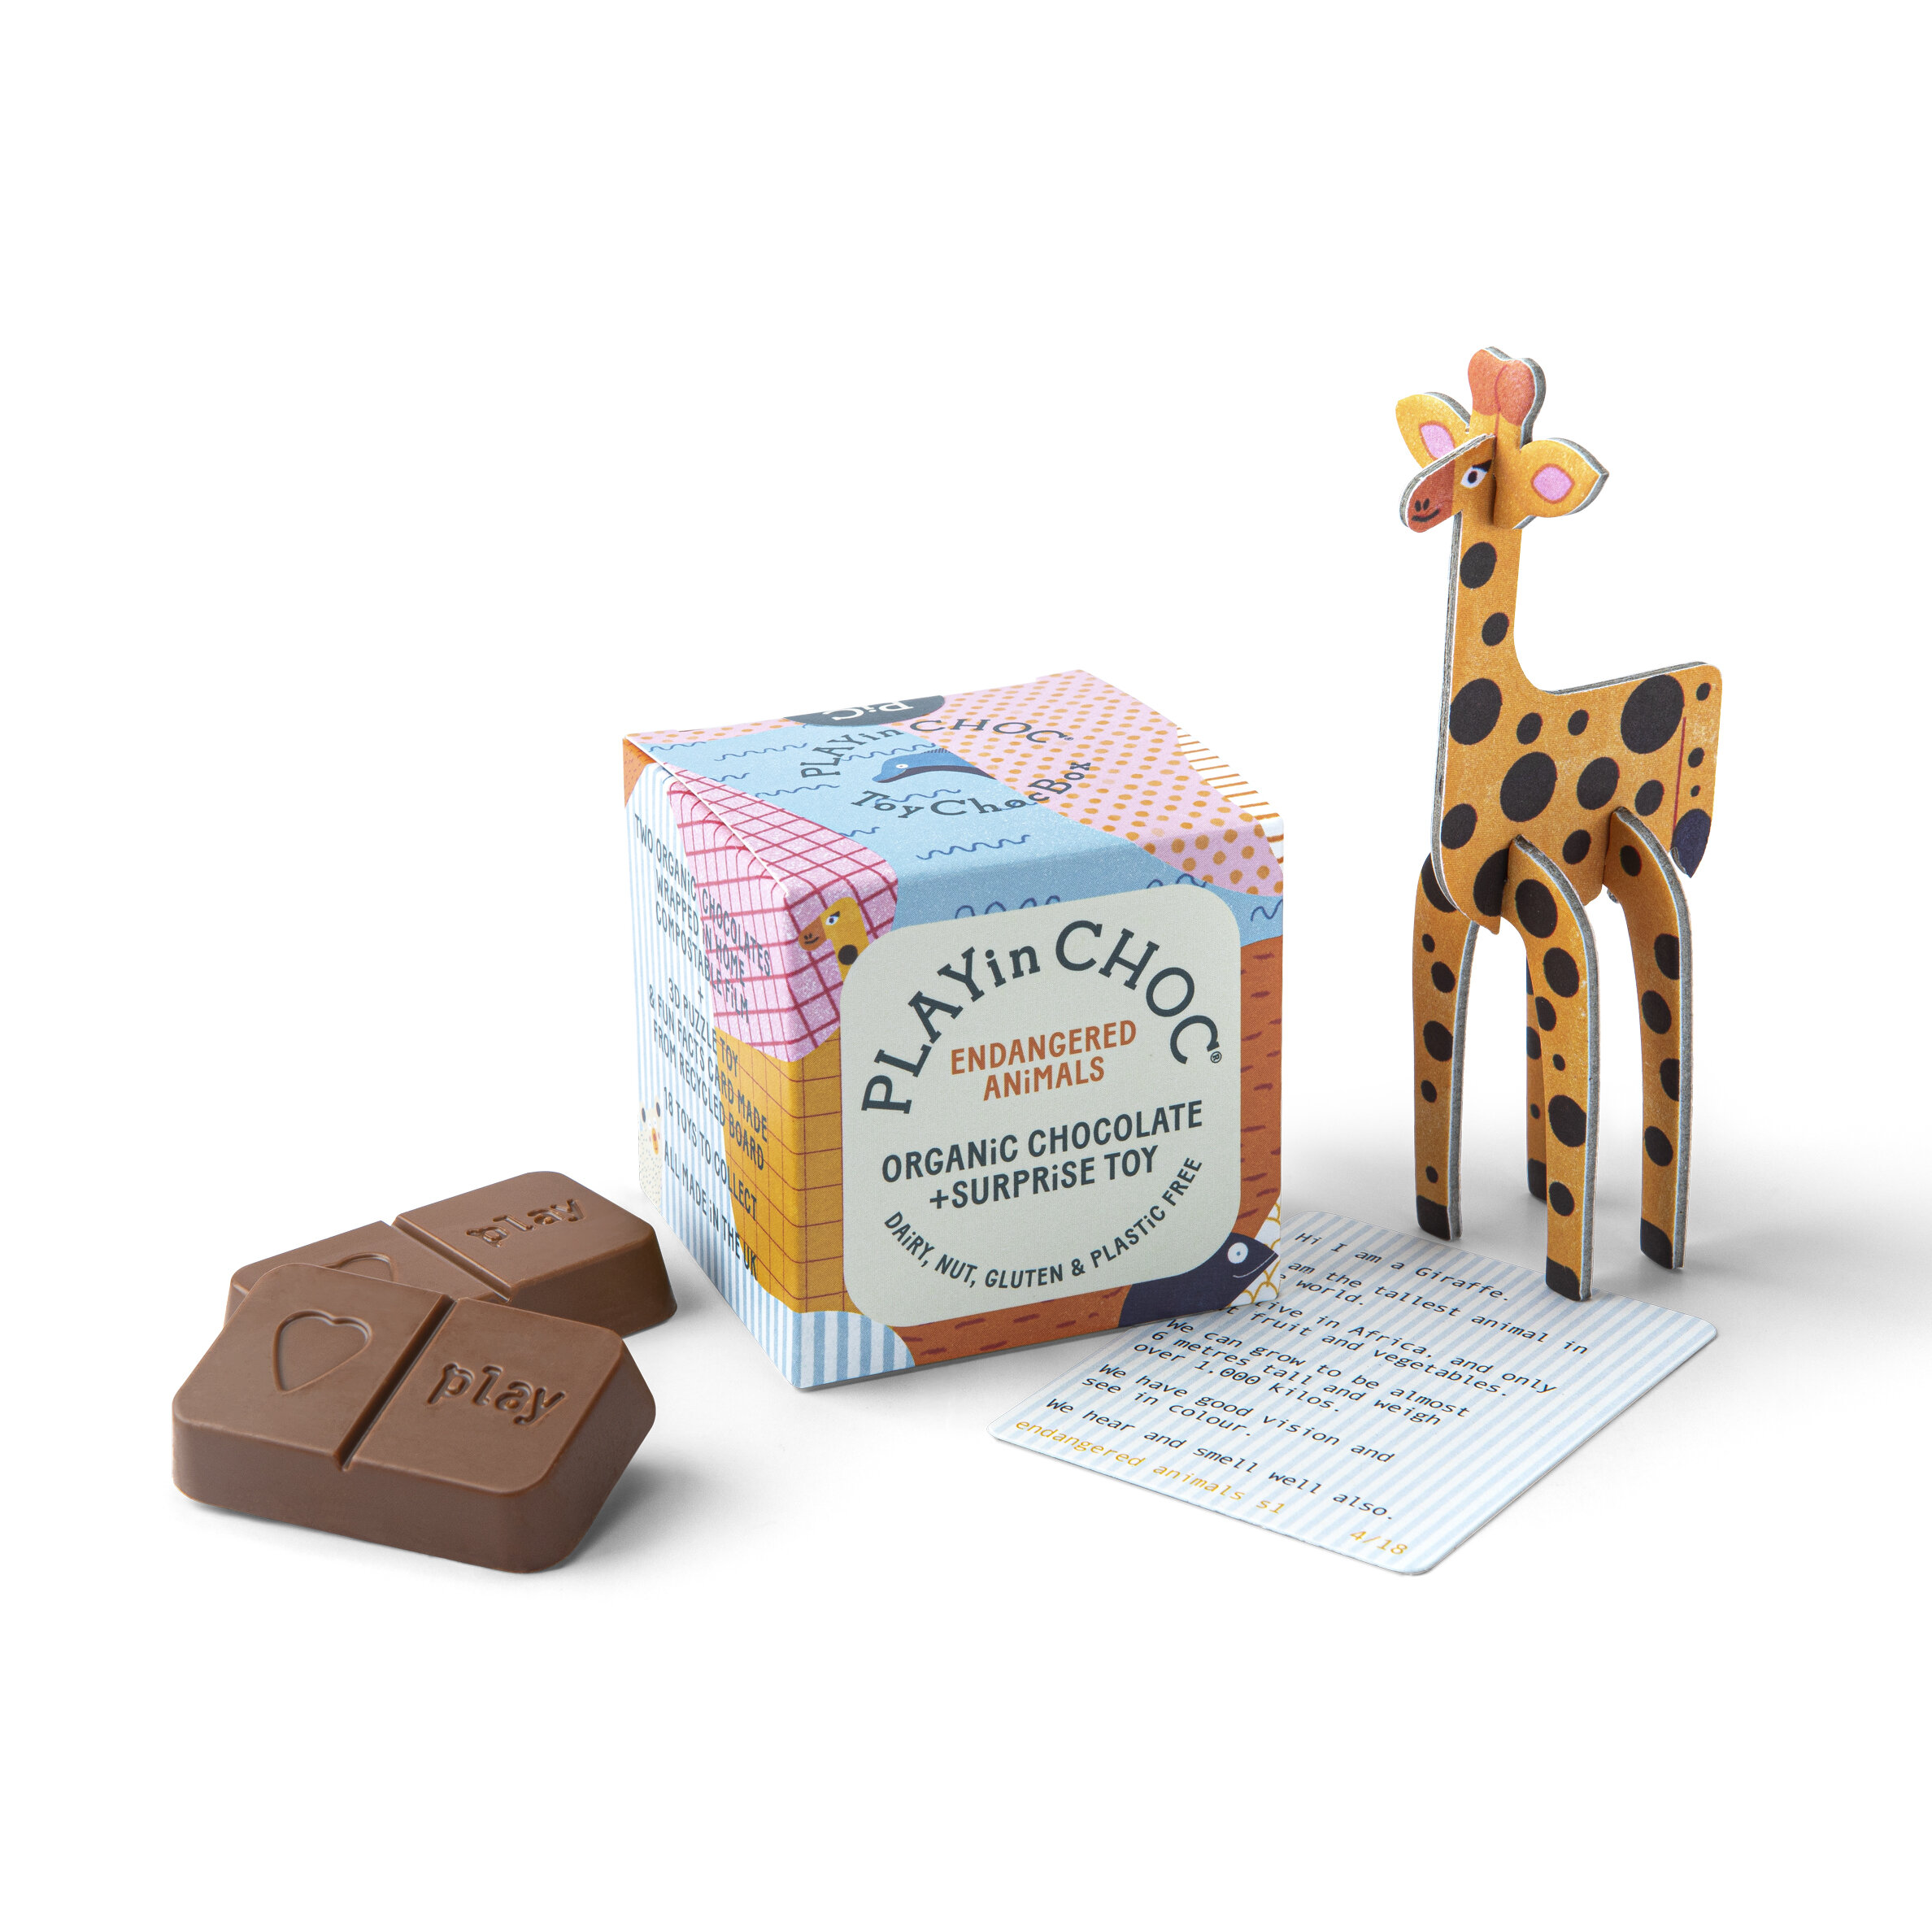 PLAYin CHOC Endangered ToyChoc Box giraffe